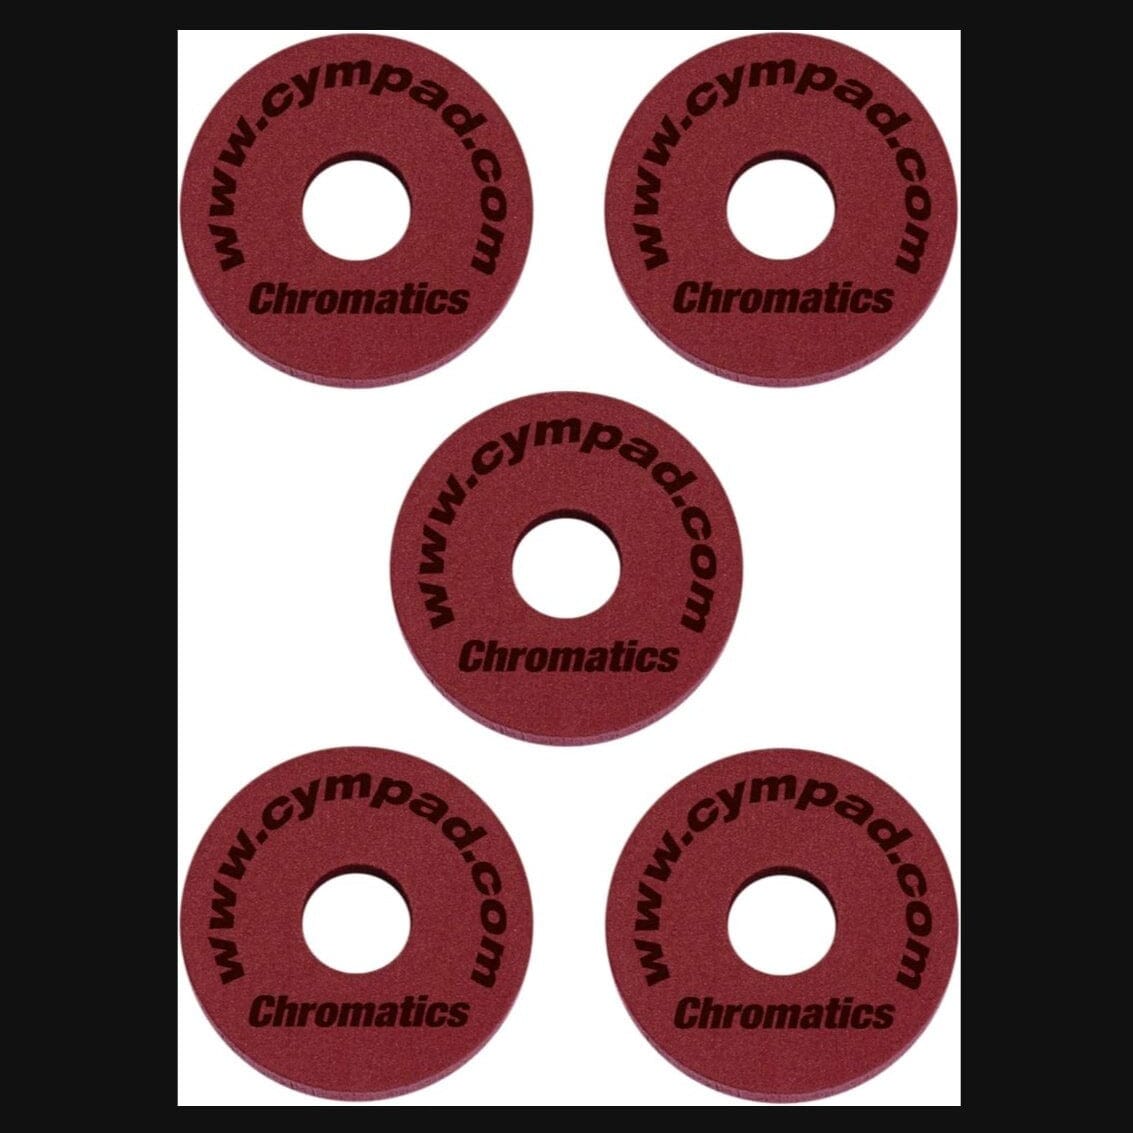 CYMPAD Chromatics Set 40/15mm, Crimson, 5 pack (CS15/5C) NEW DRUM ACCESSORIES Cympad 